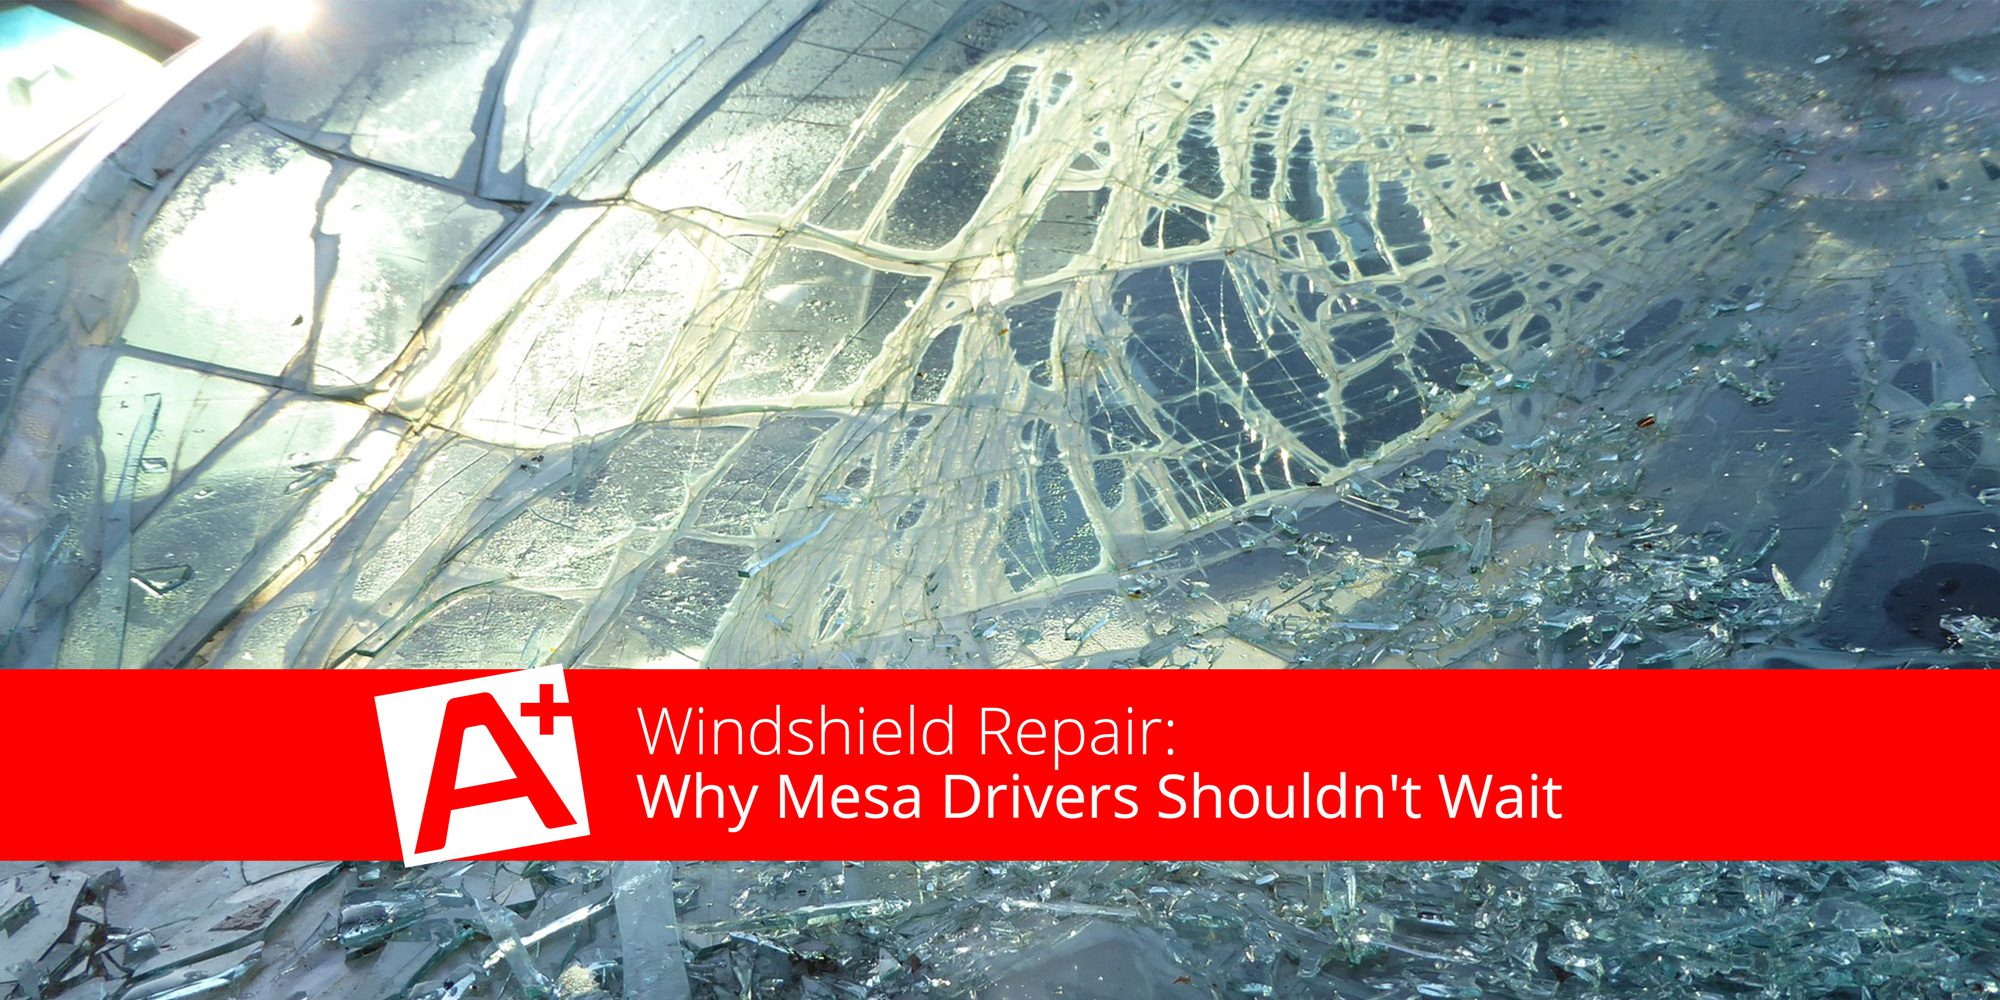 Windshield-Repair-Why-Mesa-Drivers-Shouldn't-Wait